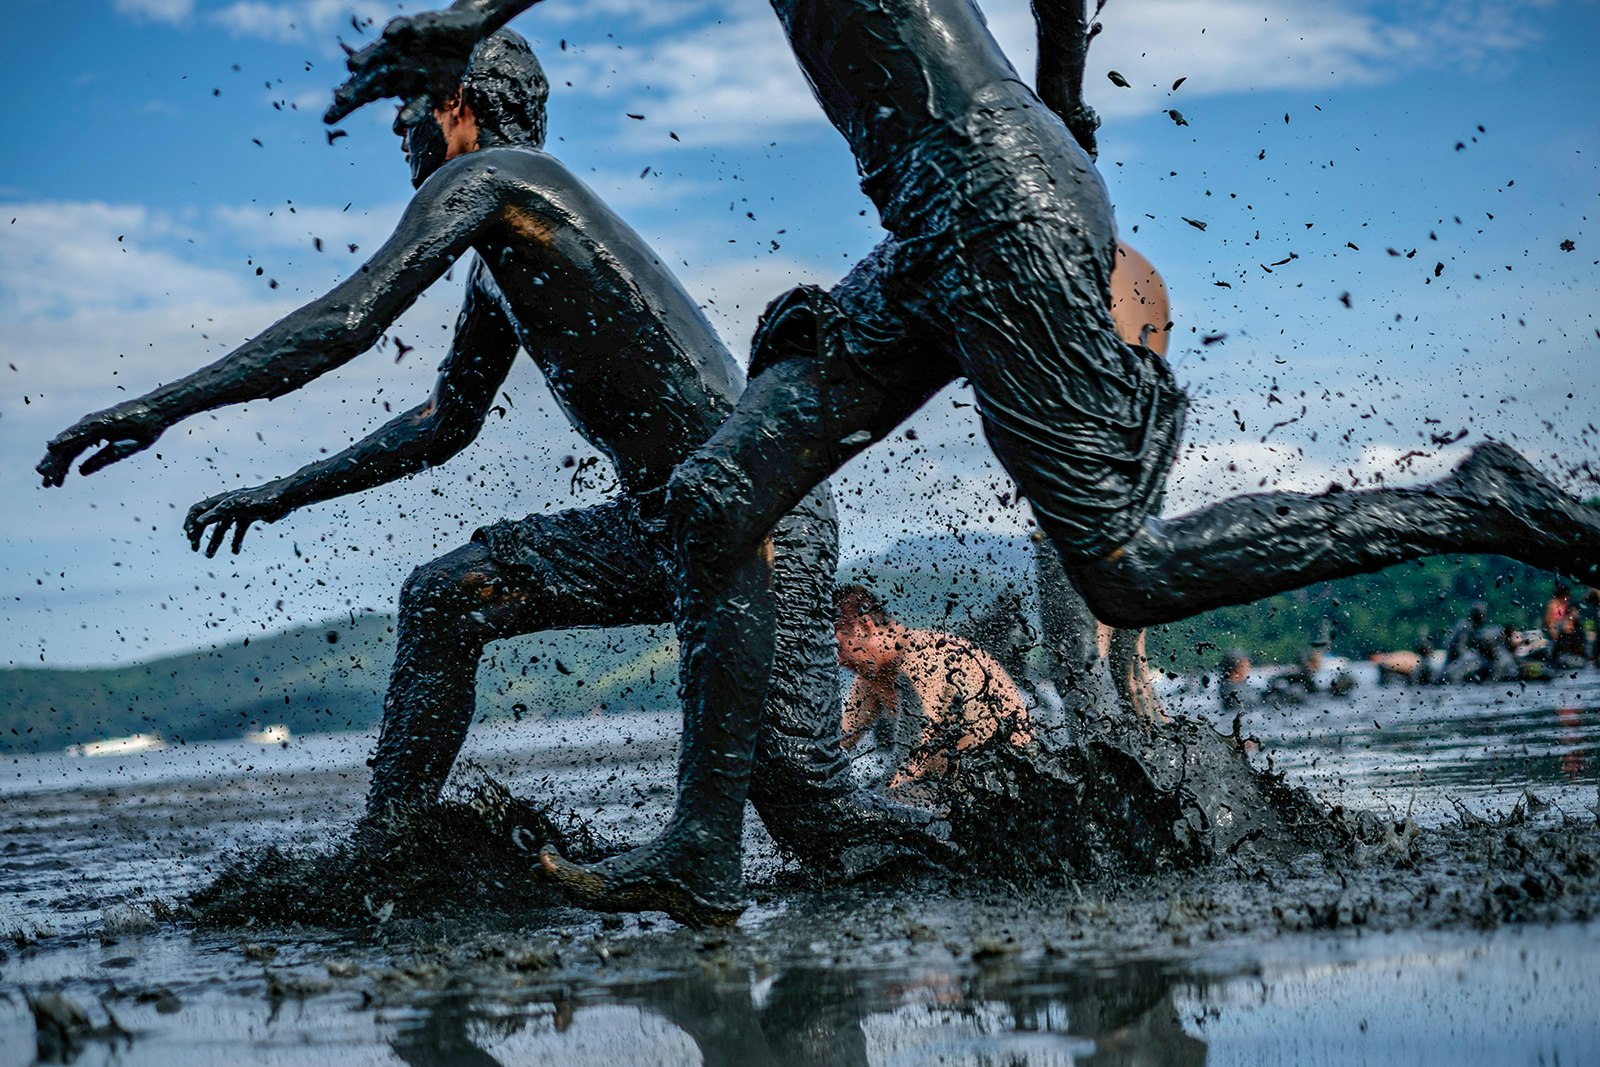 People splash through calf-deep black mud on the shores of Paraty